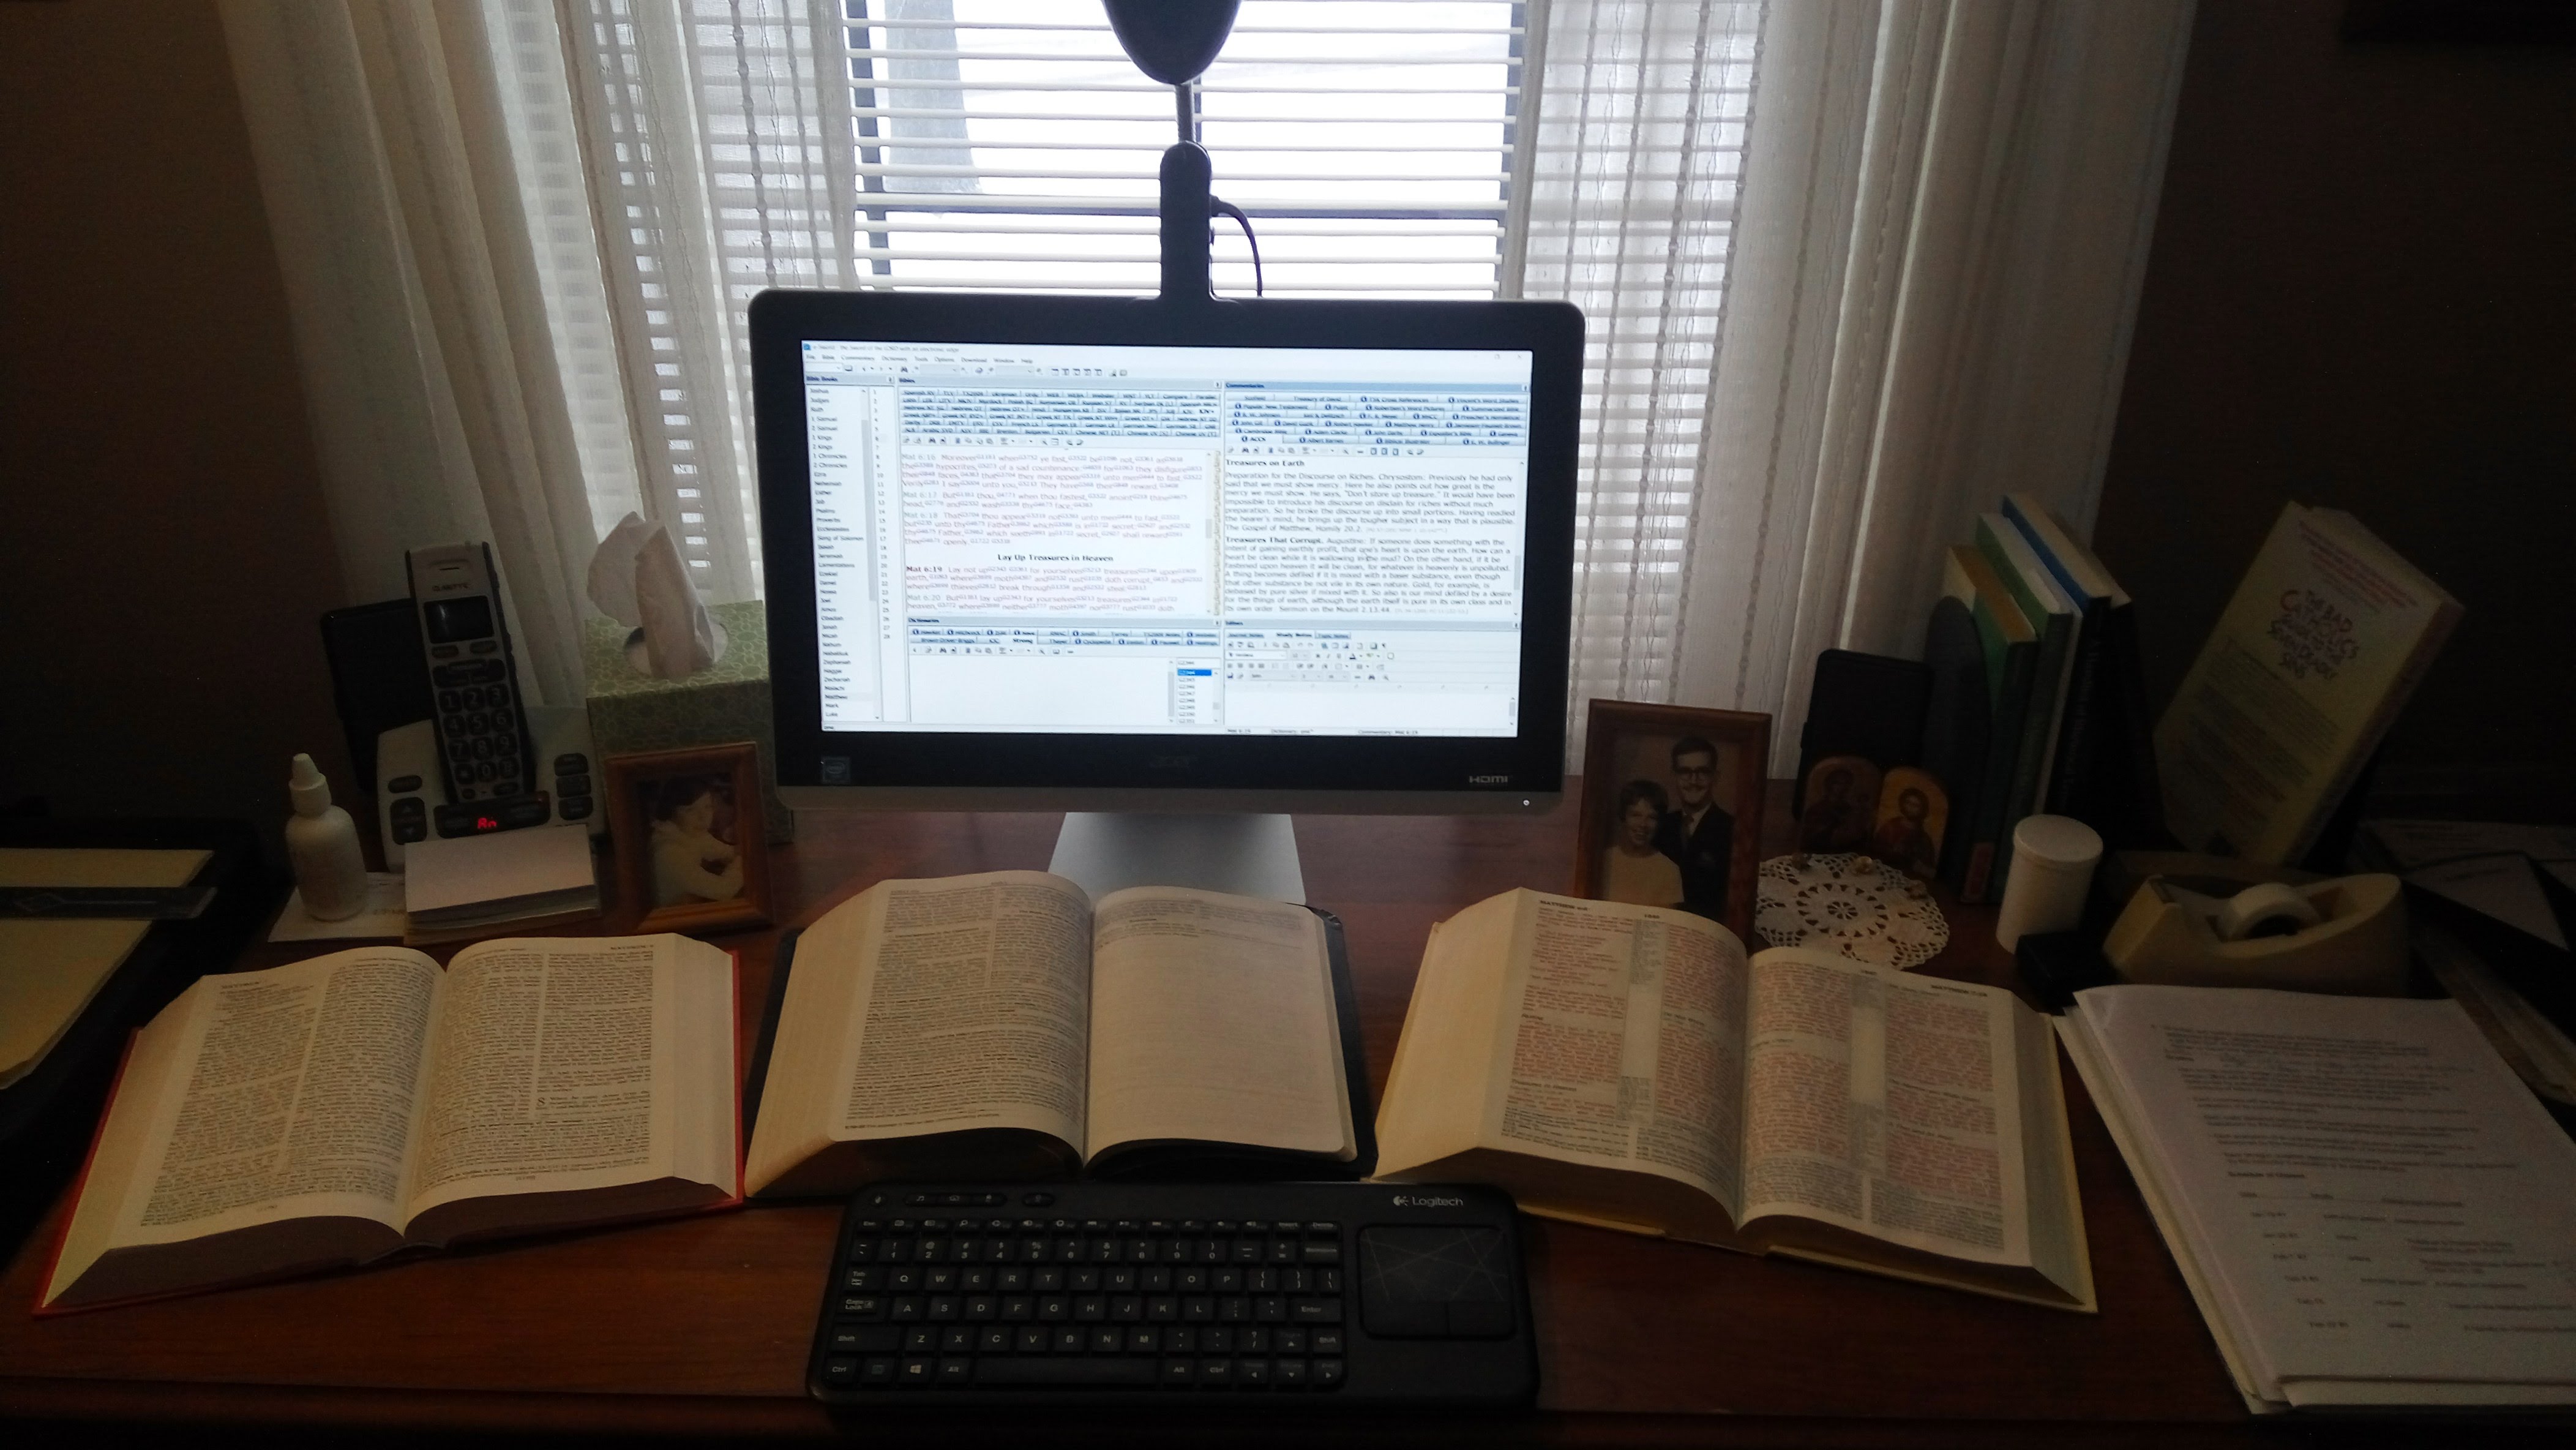 Bob's scripture study setup